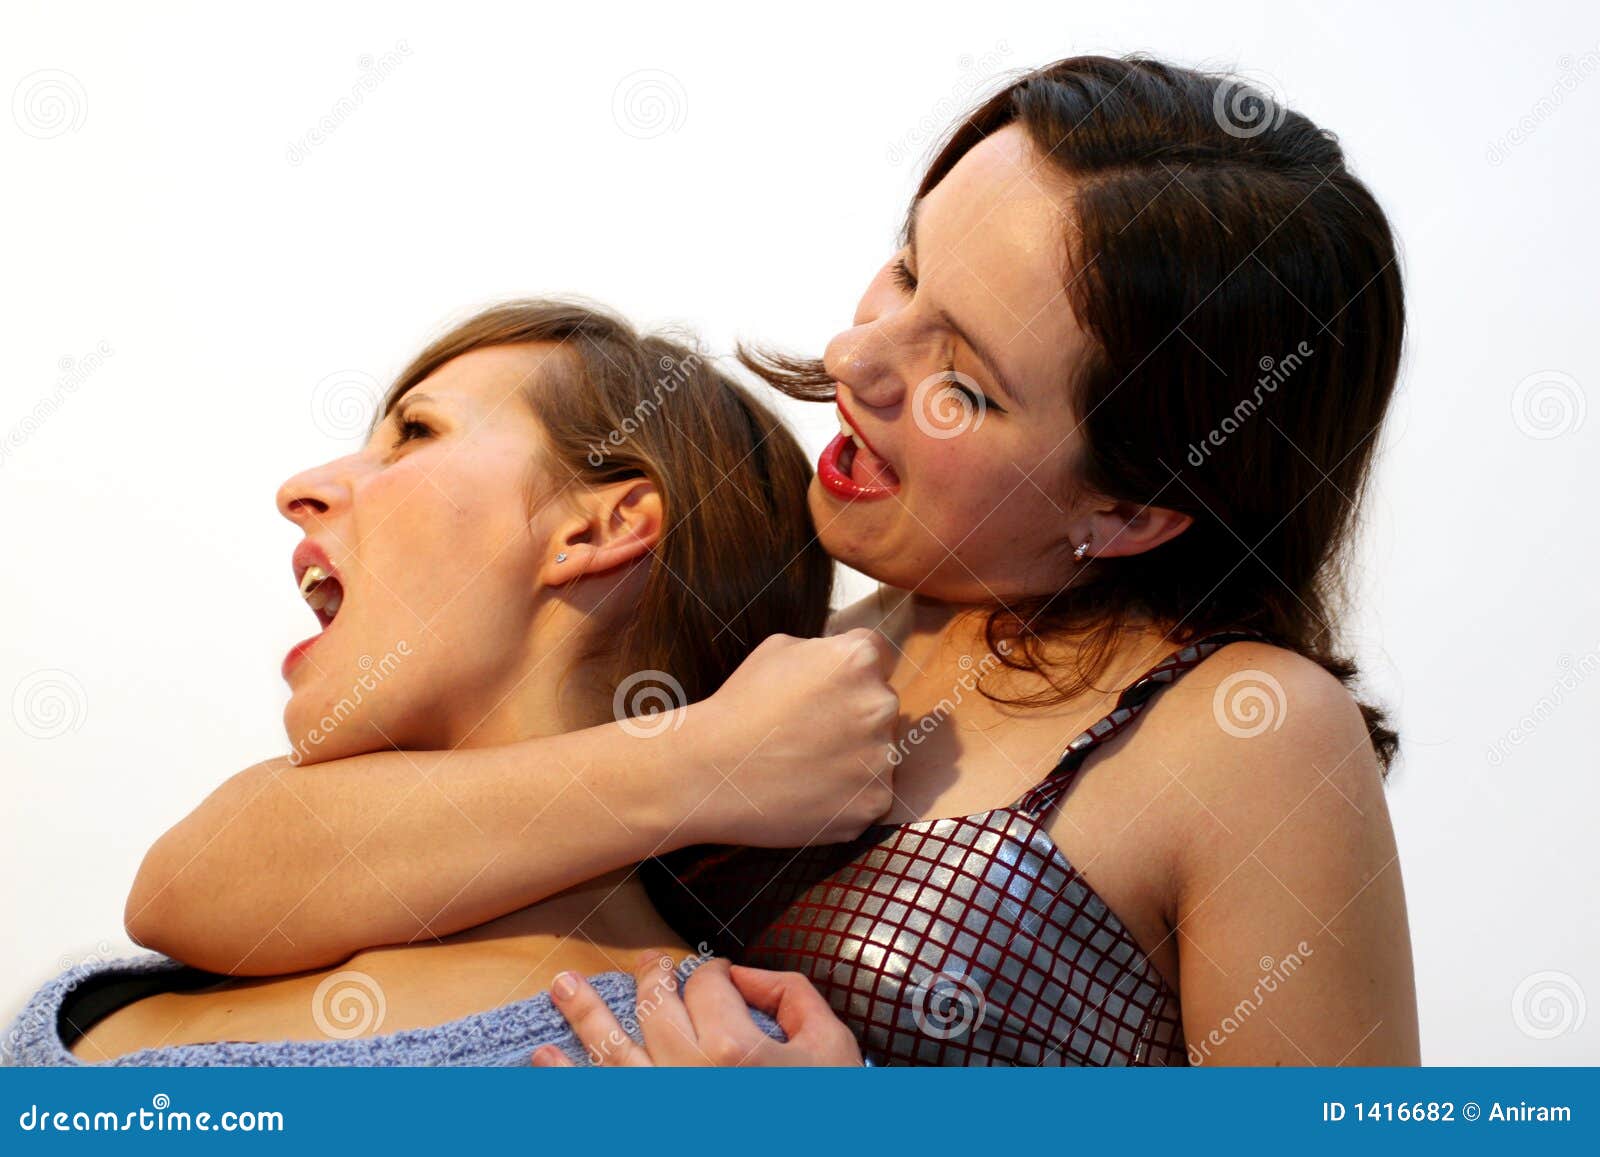 two girls fighting